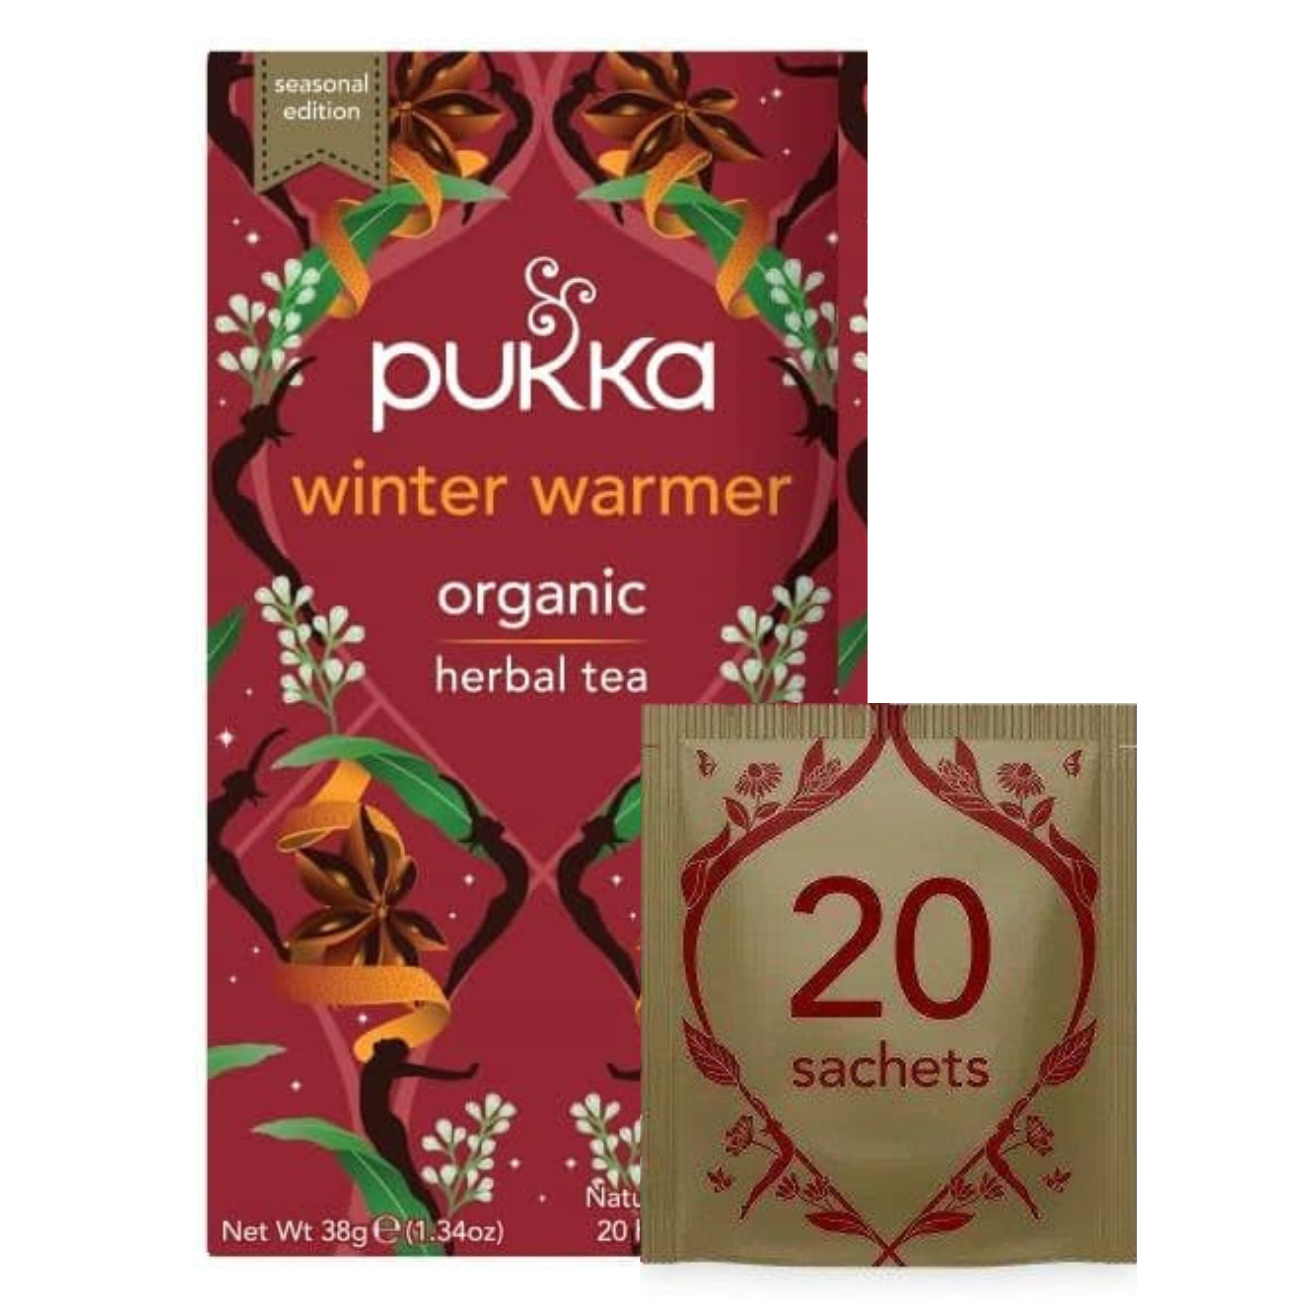 Winter Warmer Organic Herbal Tea 20 Bags